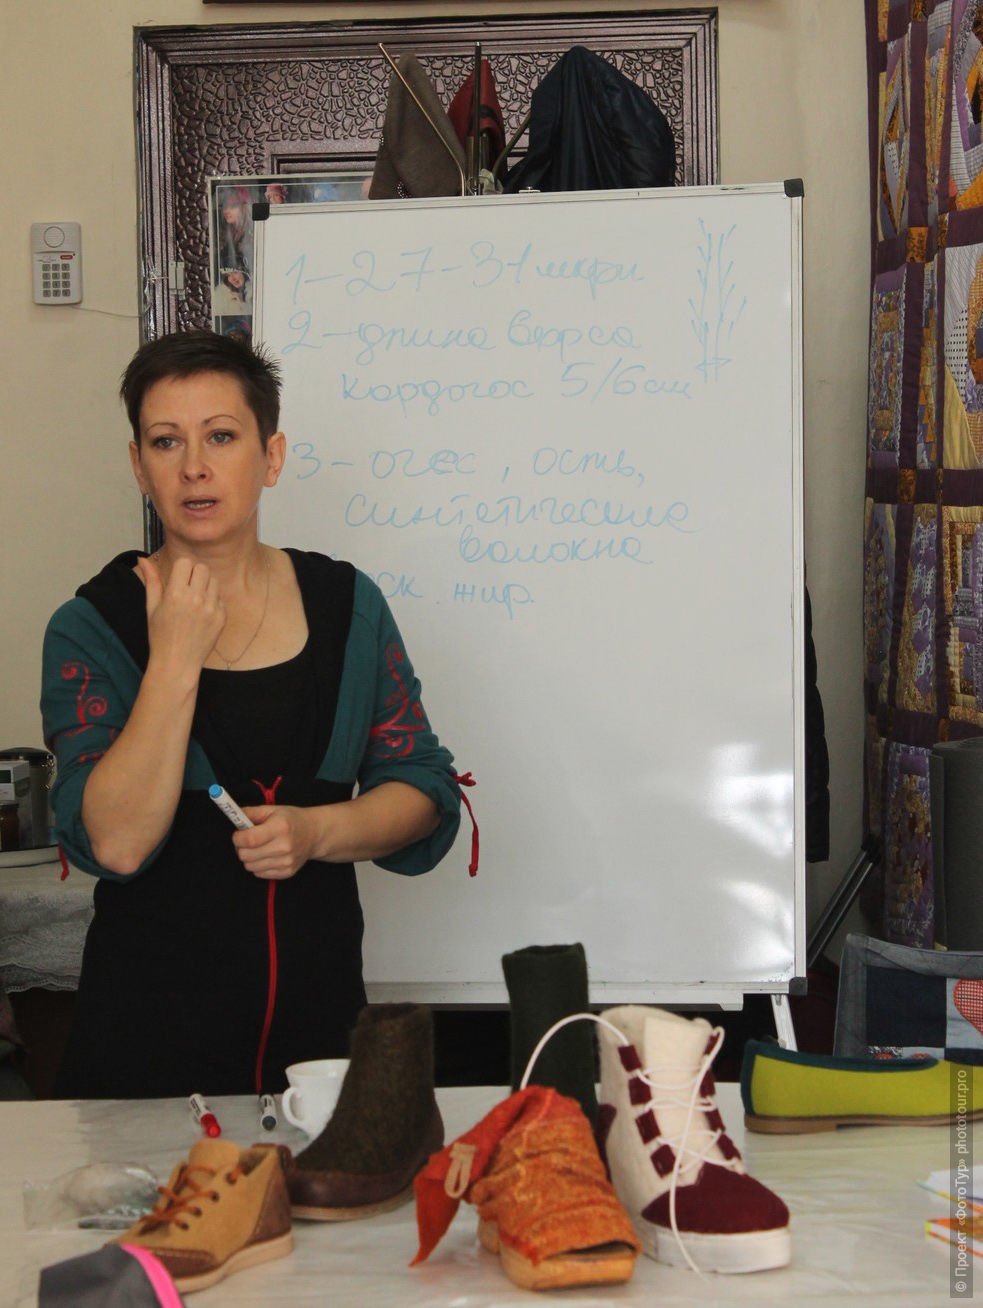 Marina Klimchuk during the seminar, Ladakh women's tour, September 2019.